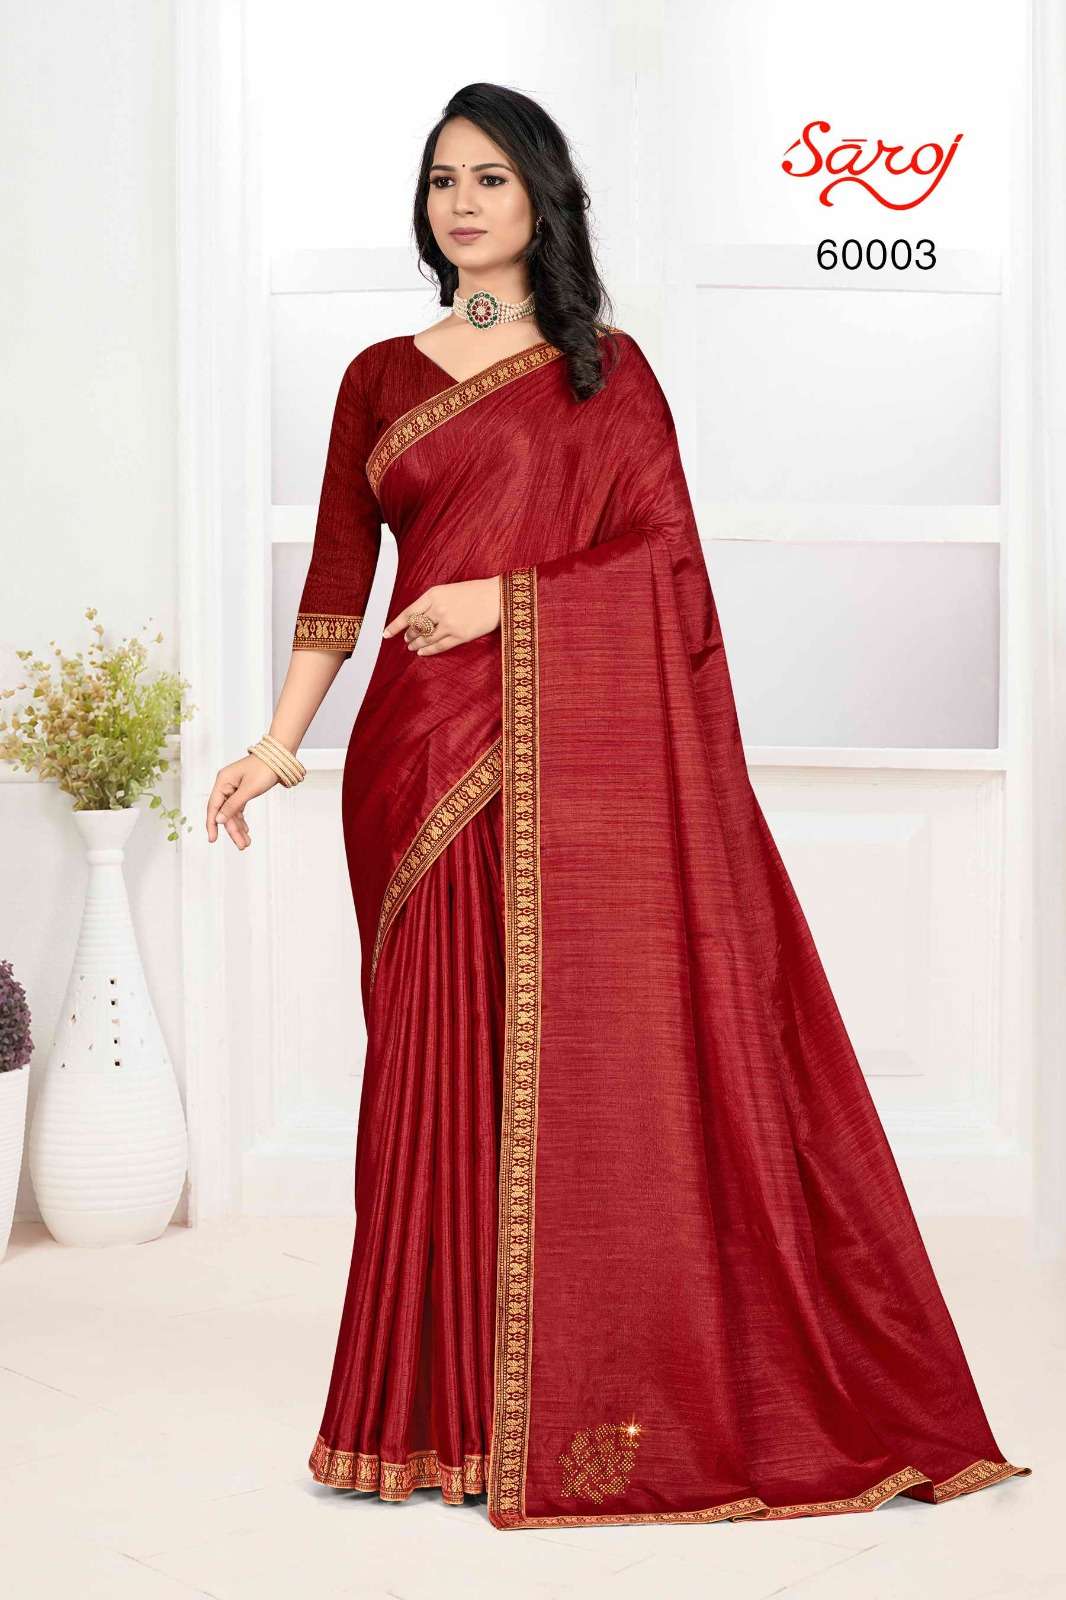 Saroj textile presents Fruit combo-7 Designer casual sarees catalogue